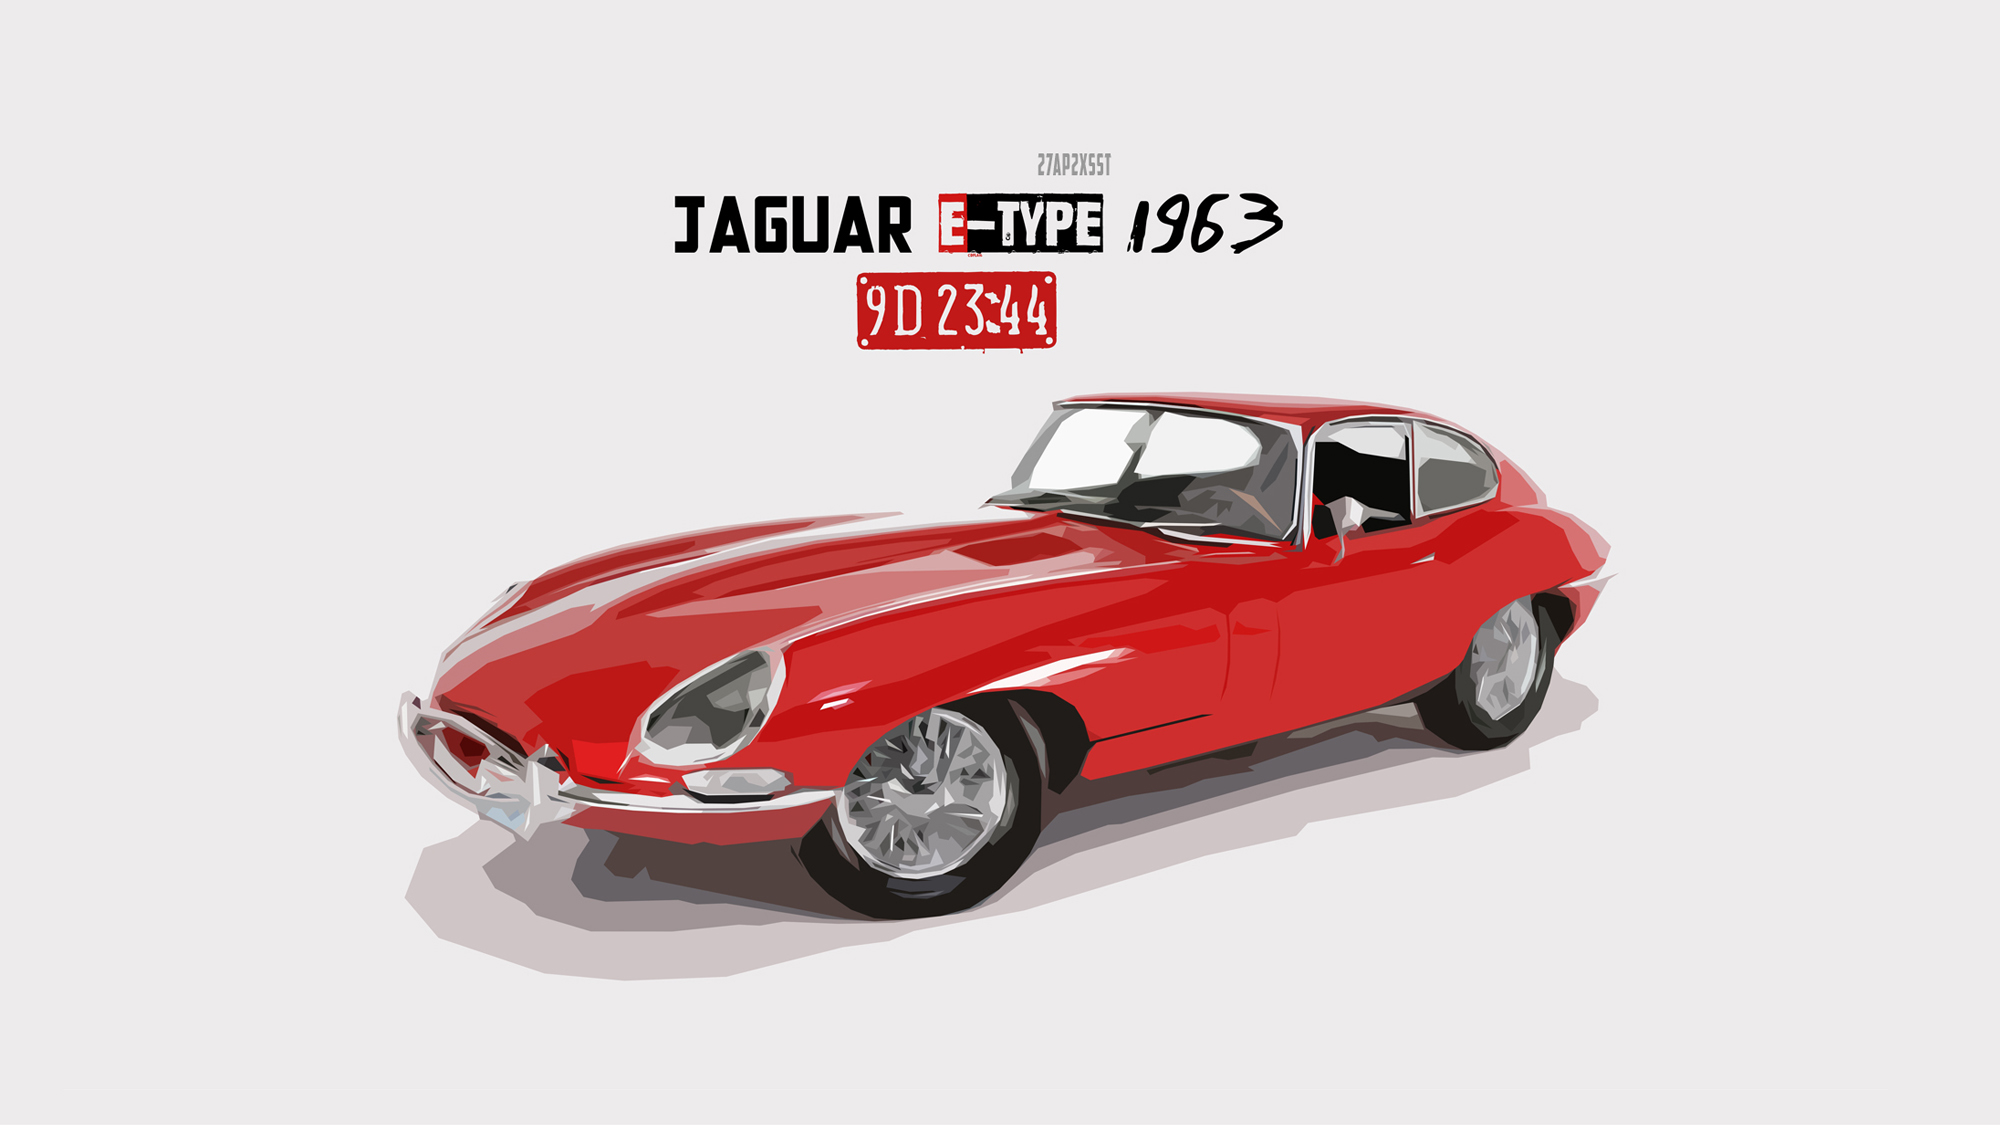 412142 Hintergrundbild herunterladen fahrzeuge, jaguar e type, autos, jaguar autos, retro, uralt, jaguar - Bildschirmschoner und Bilder kostenlos